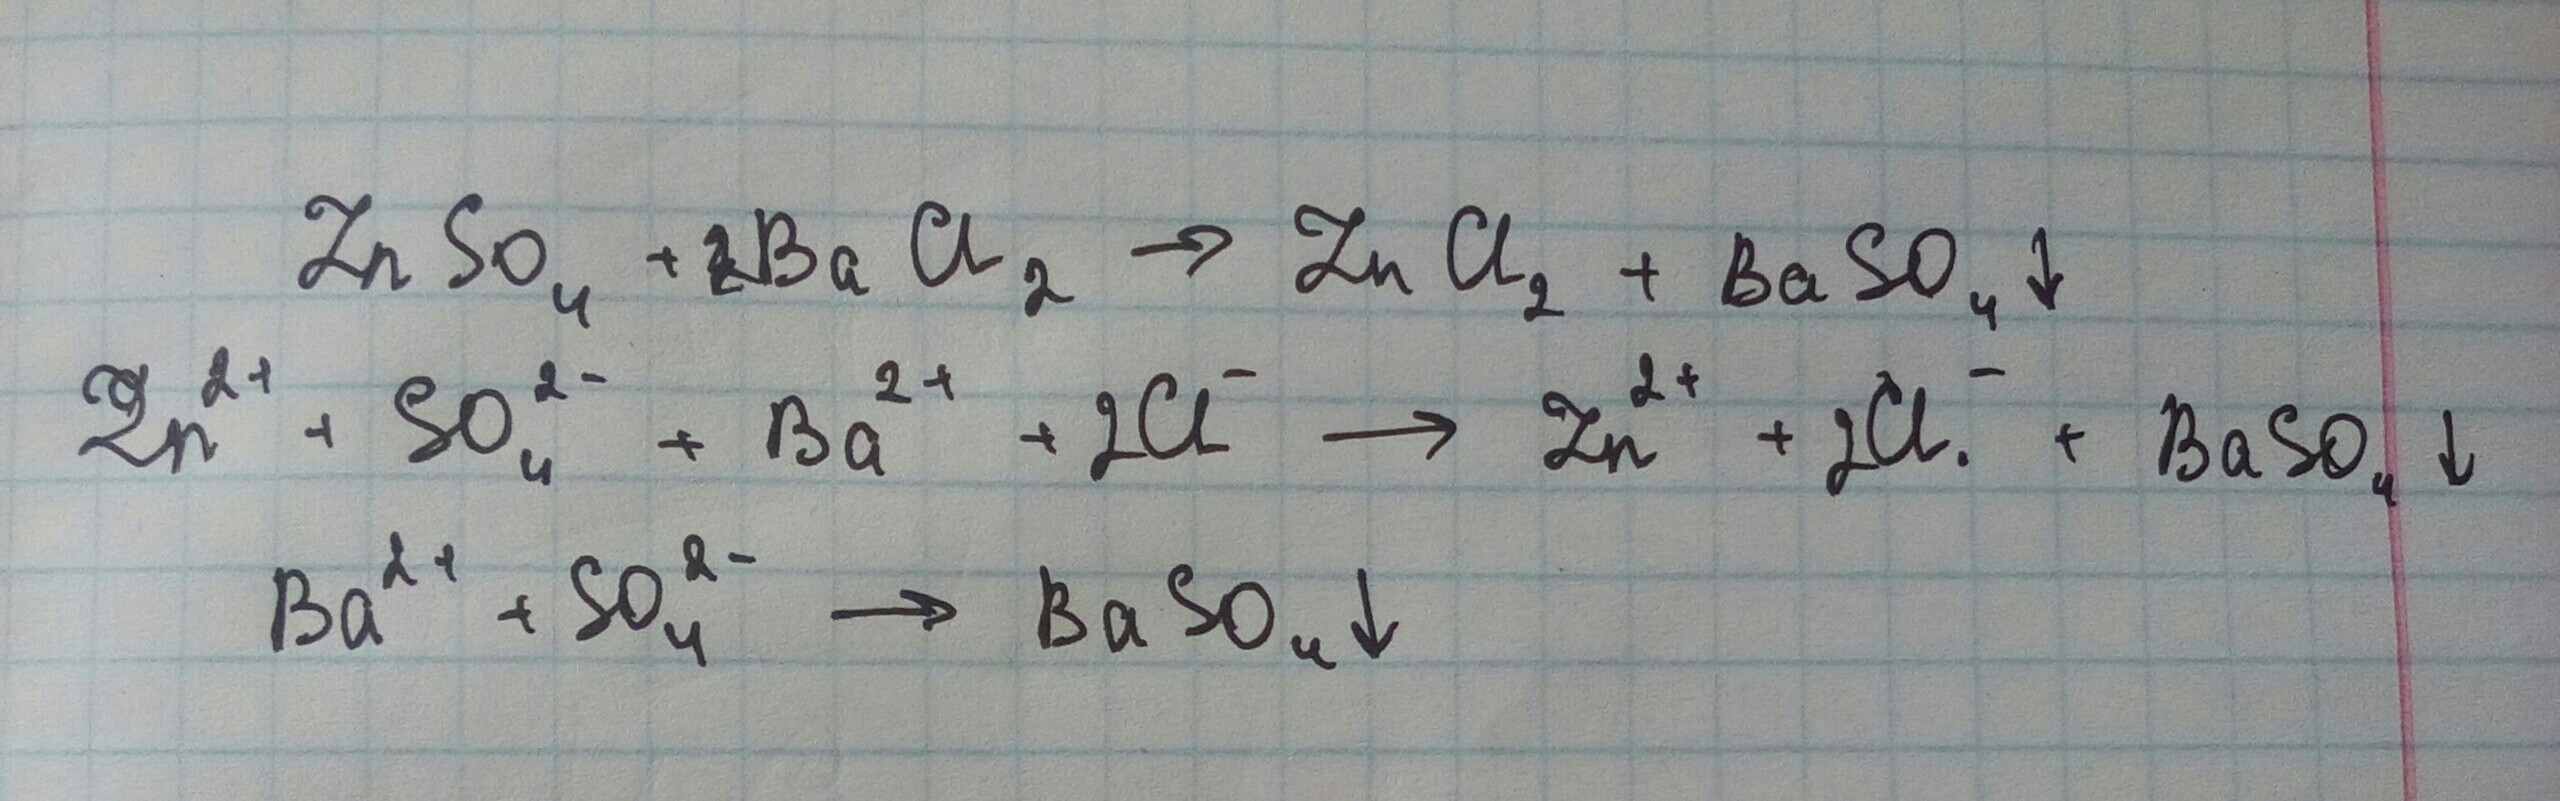 Zn bacl2 h2o. Bacl2+znso4. Znso4 bacl2 ионное уравнение. Bacl2 znso4 уравнение молекулярное. Bacl2+znso4 уравнение реакции.